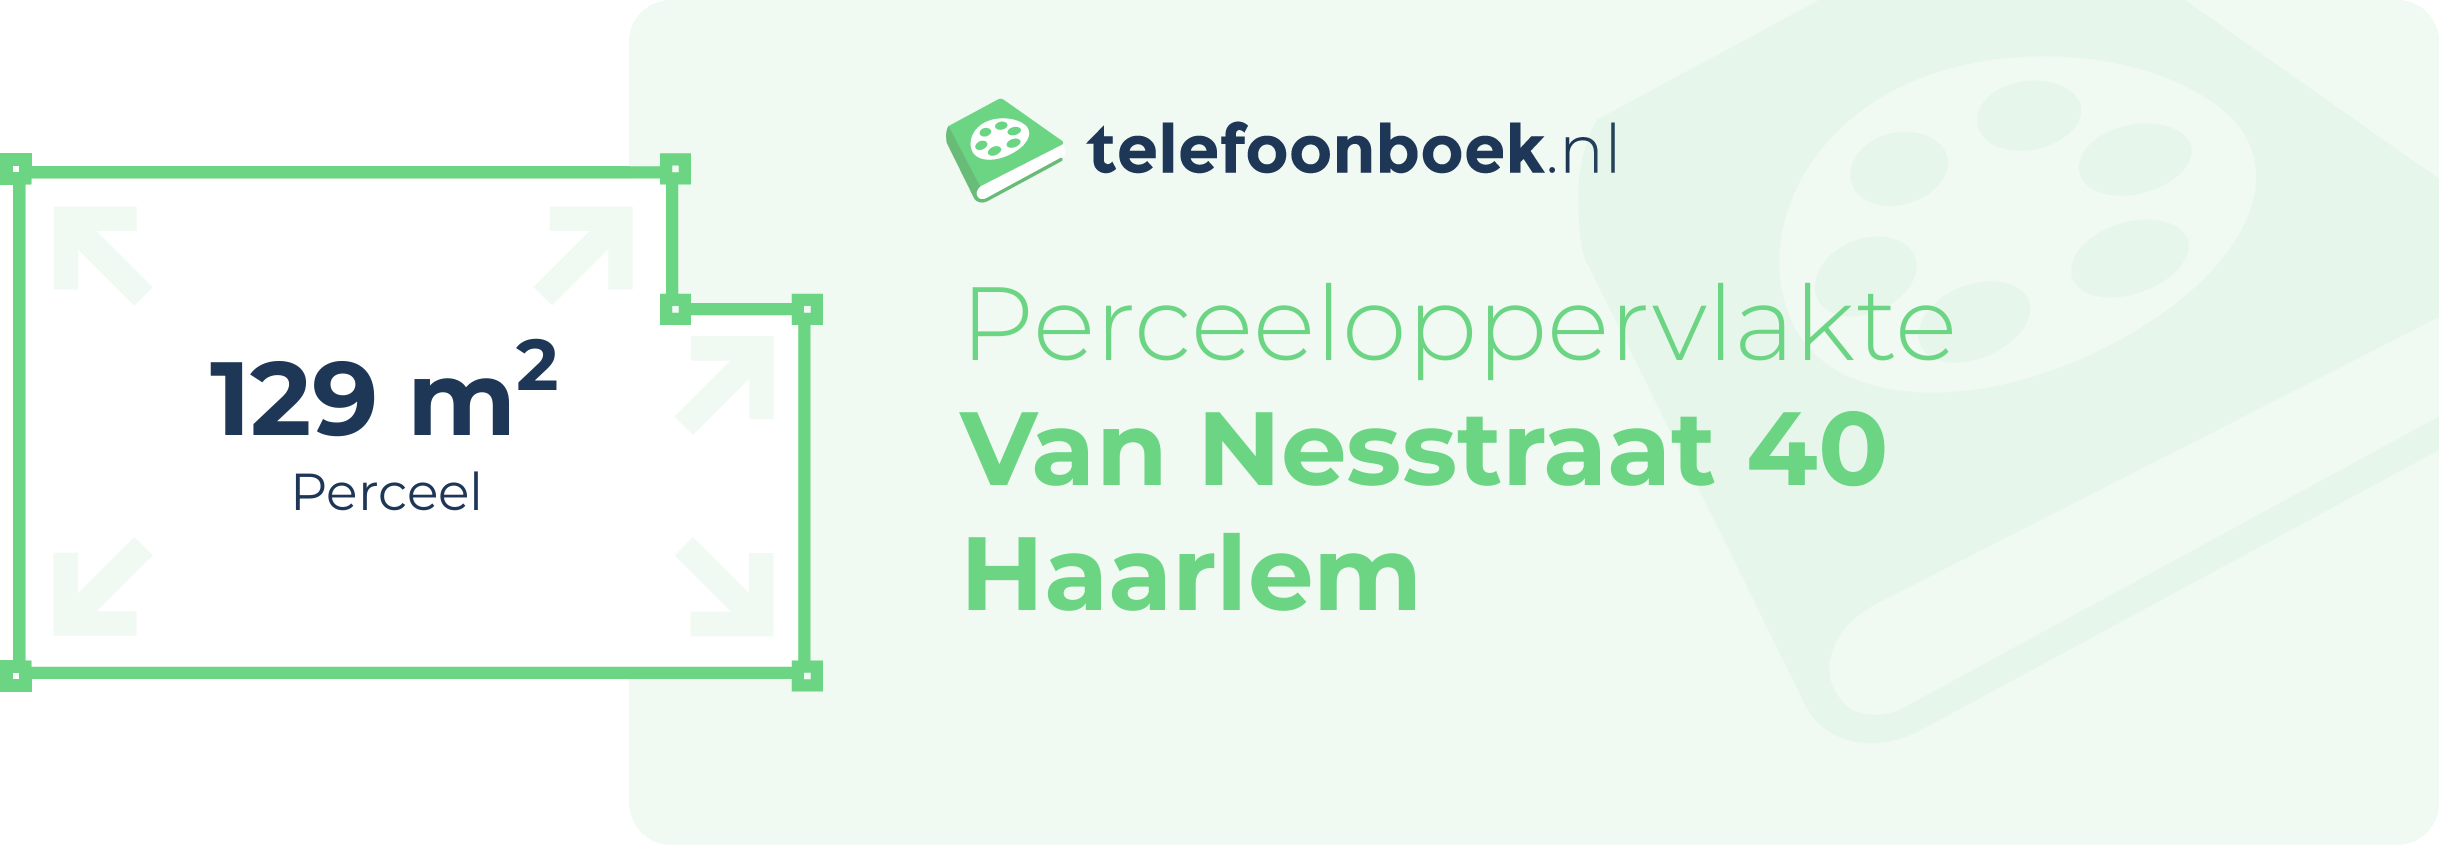 Perceeloppervlakte Van Nesstraat 40 Haarlem